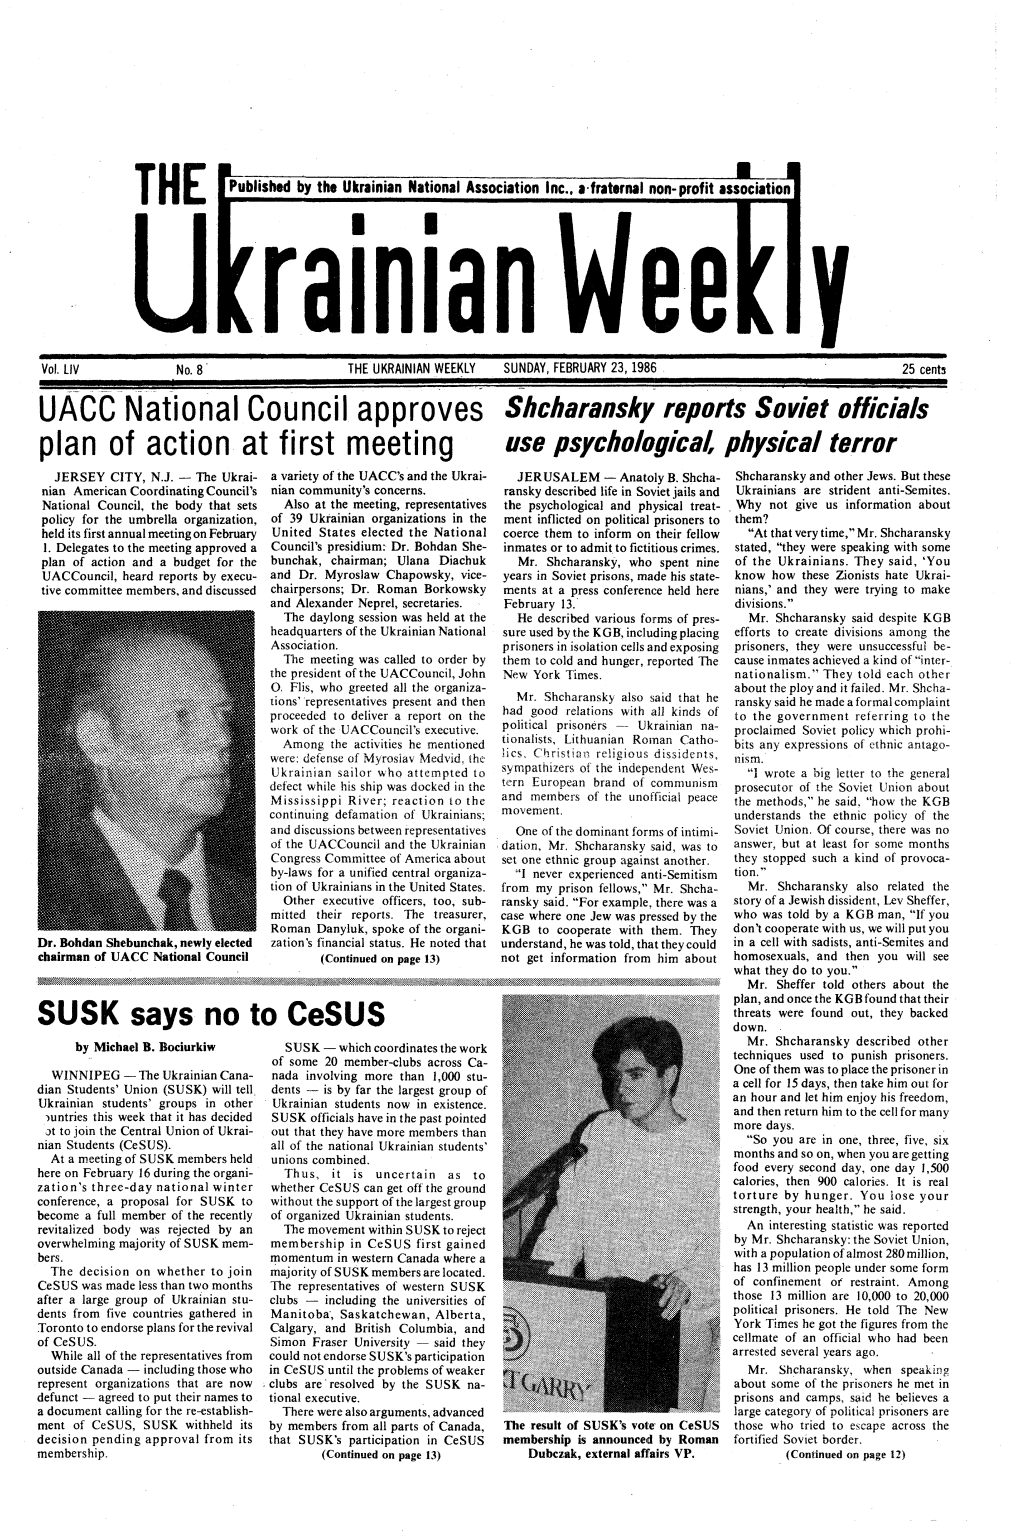 The Ukrainian Weekly 1986, No.8